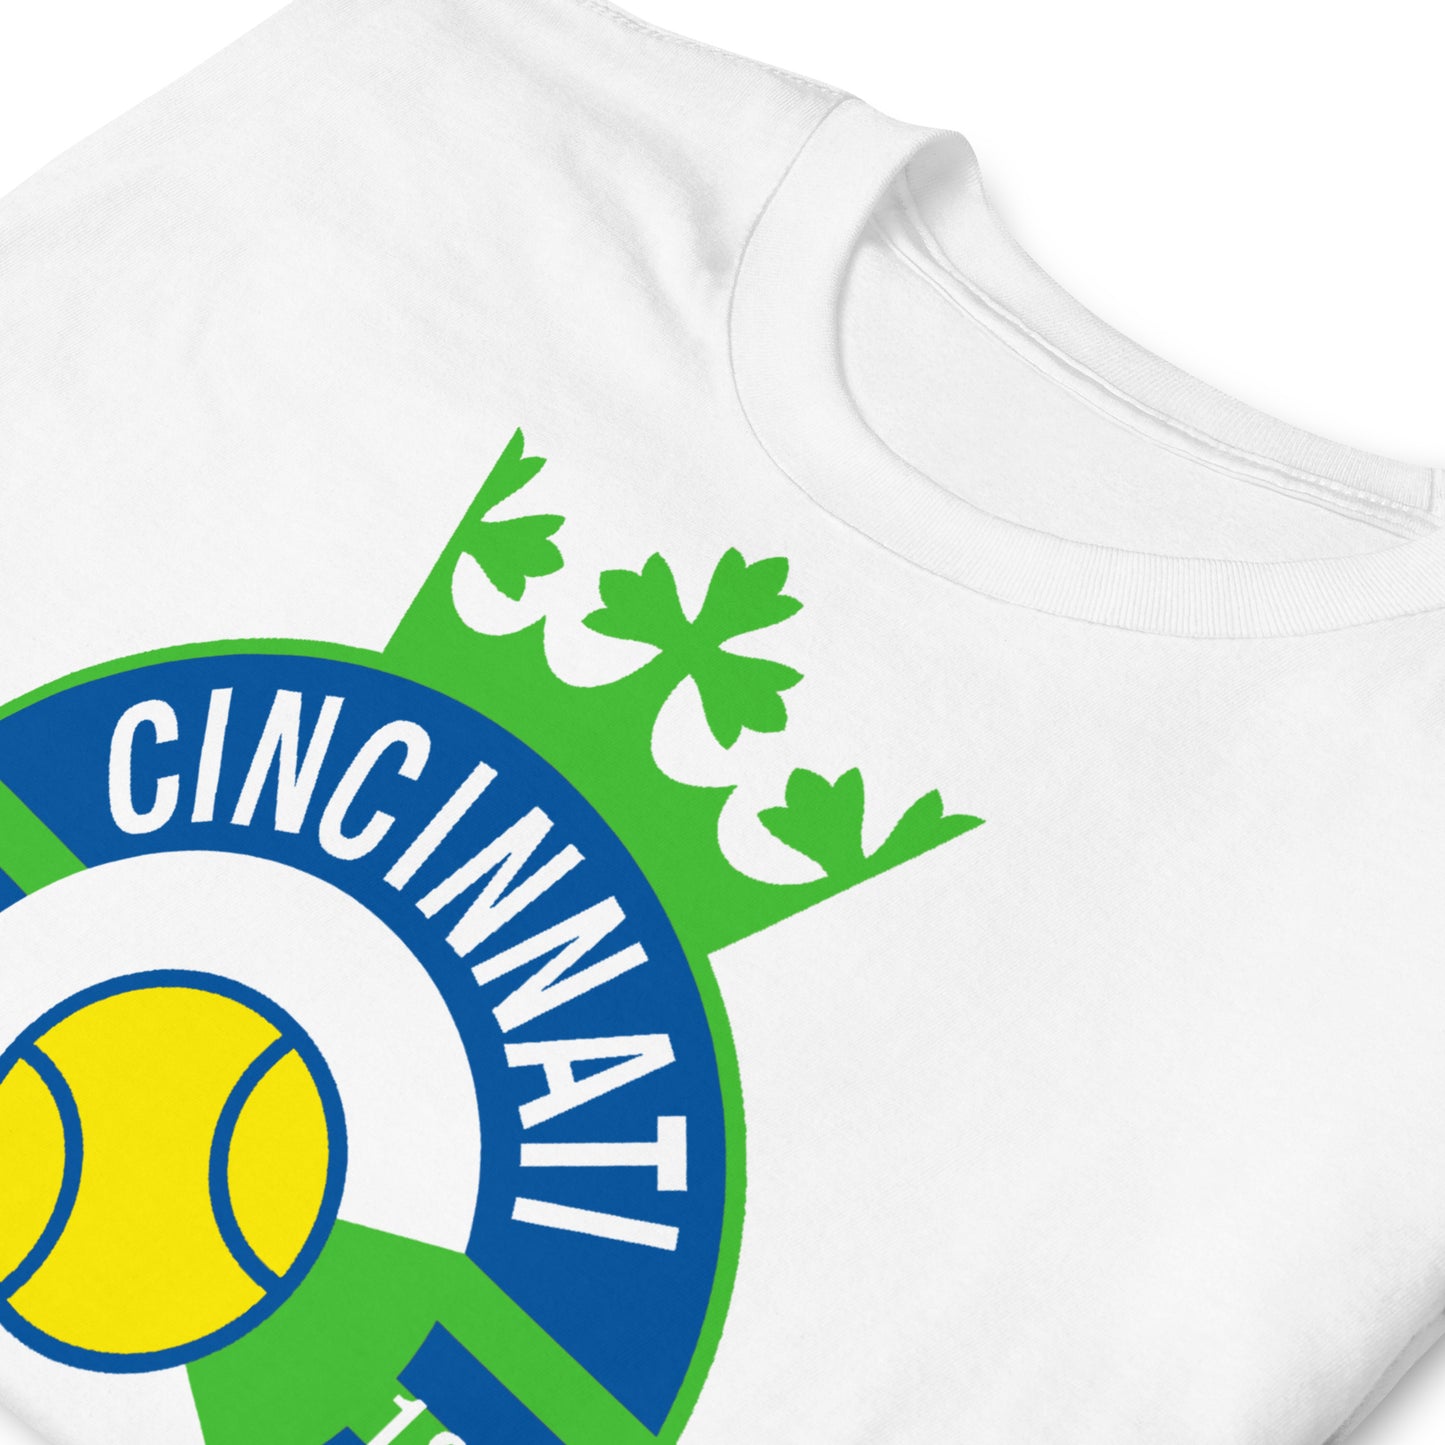 Cincinnati Tennis Club unisex shirt